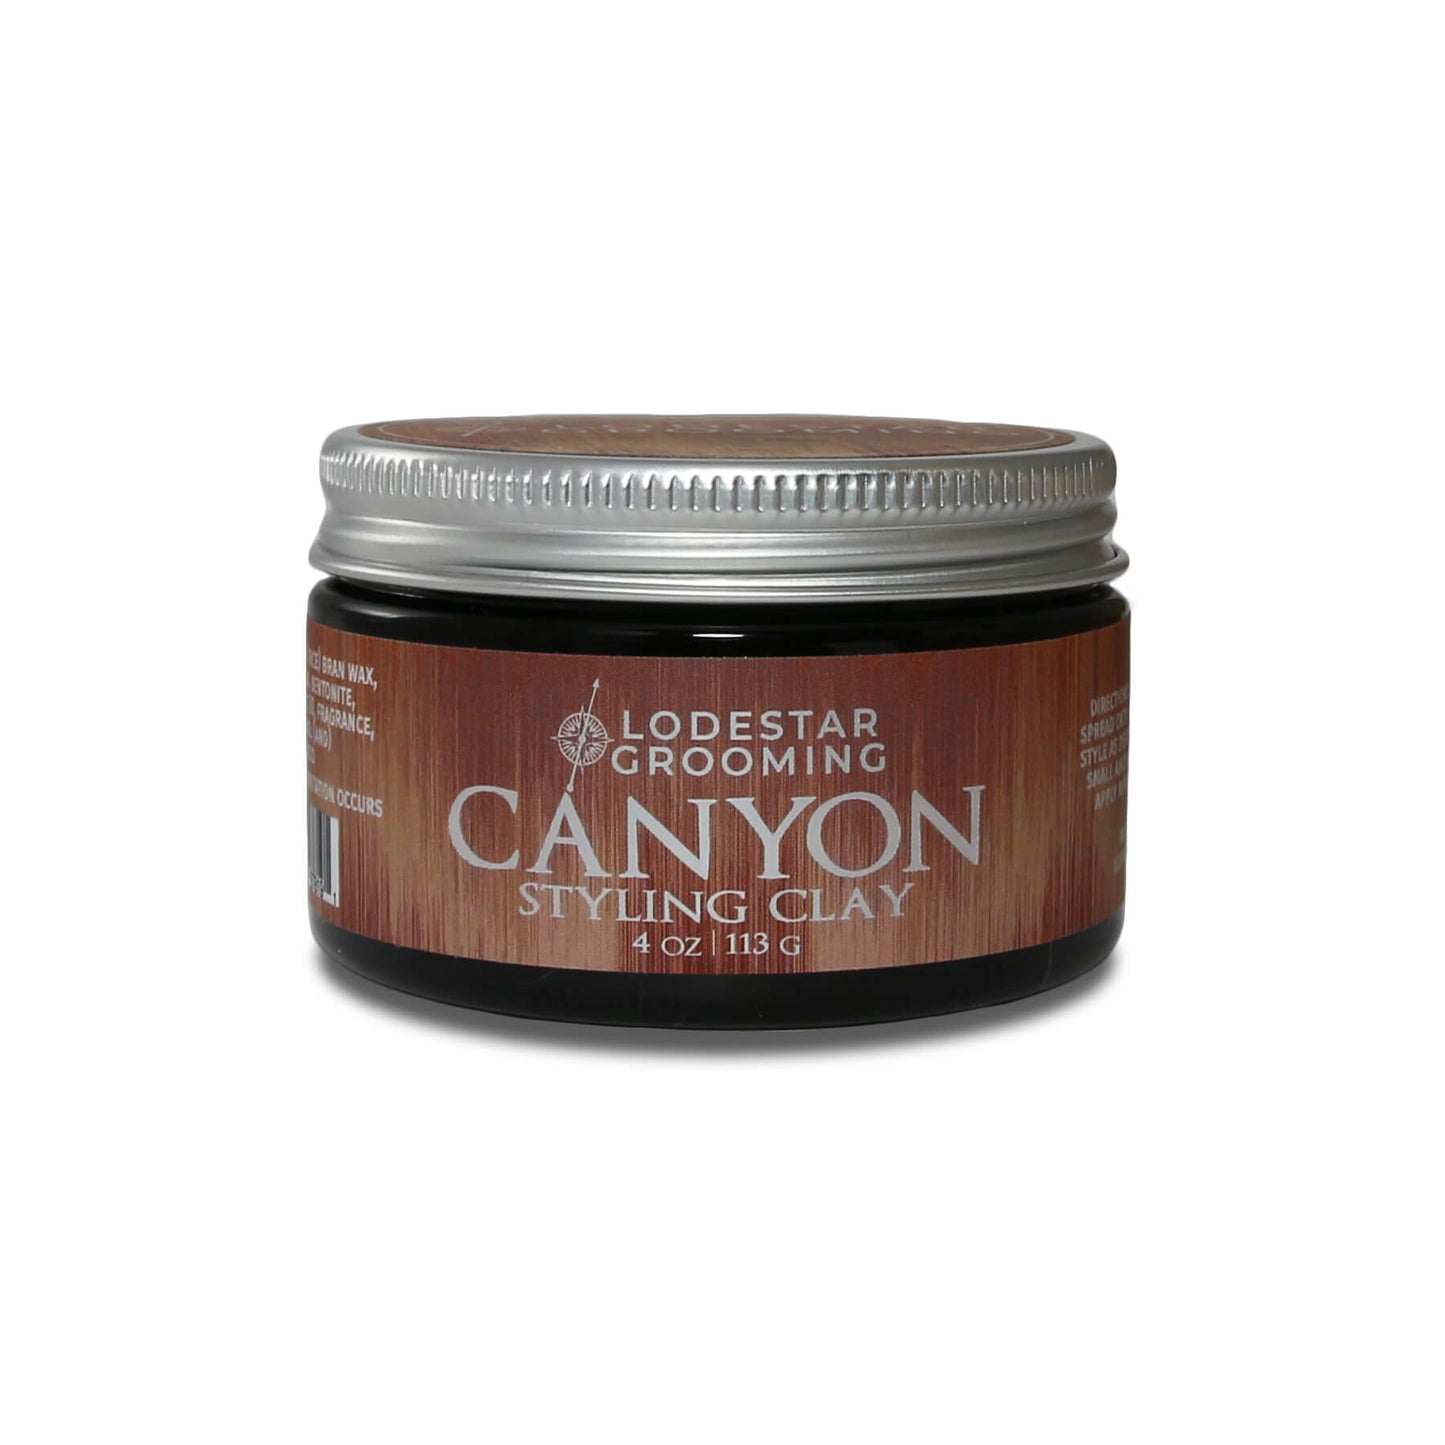 Lodestar Grooming Canyon Styling Clay 4OZ